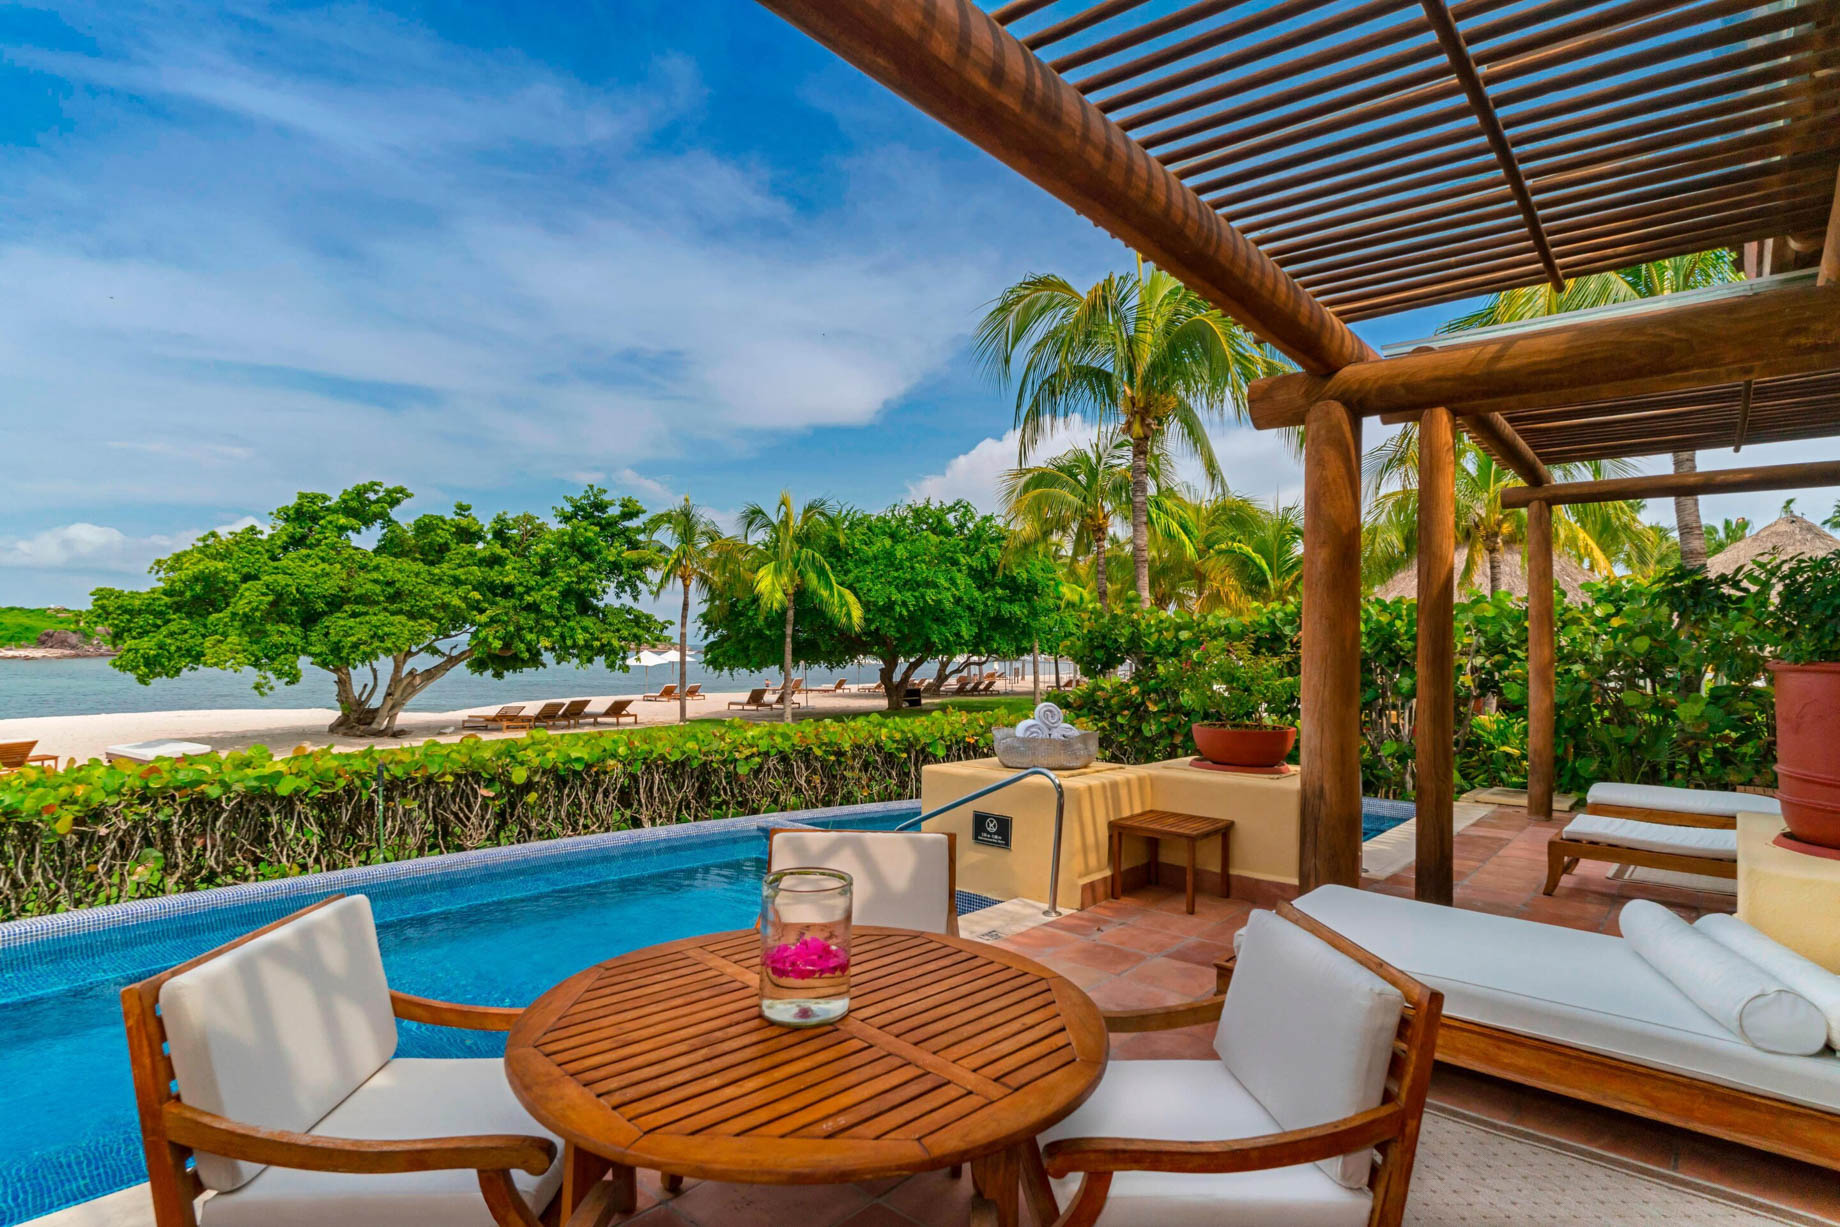 The St. Regis Punta Mita Resort – Nayarit, Mexico – Luxury Villa Ocean View Terrace